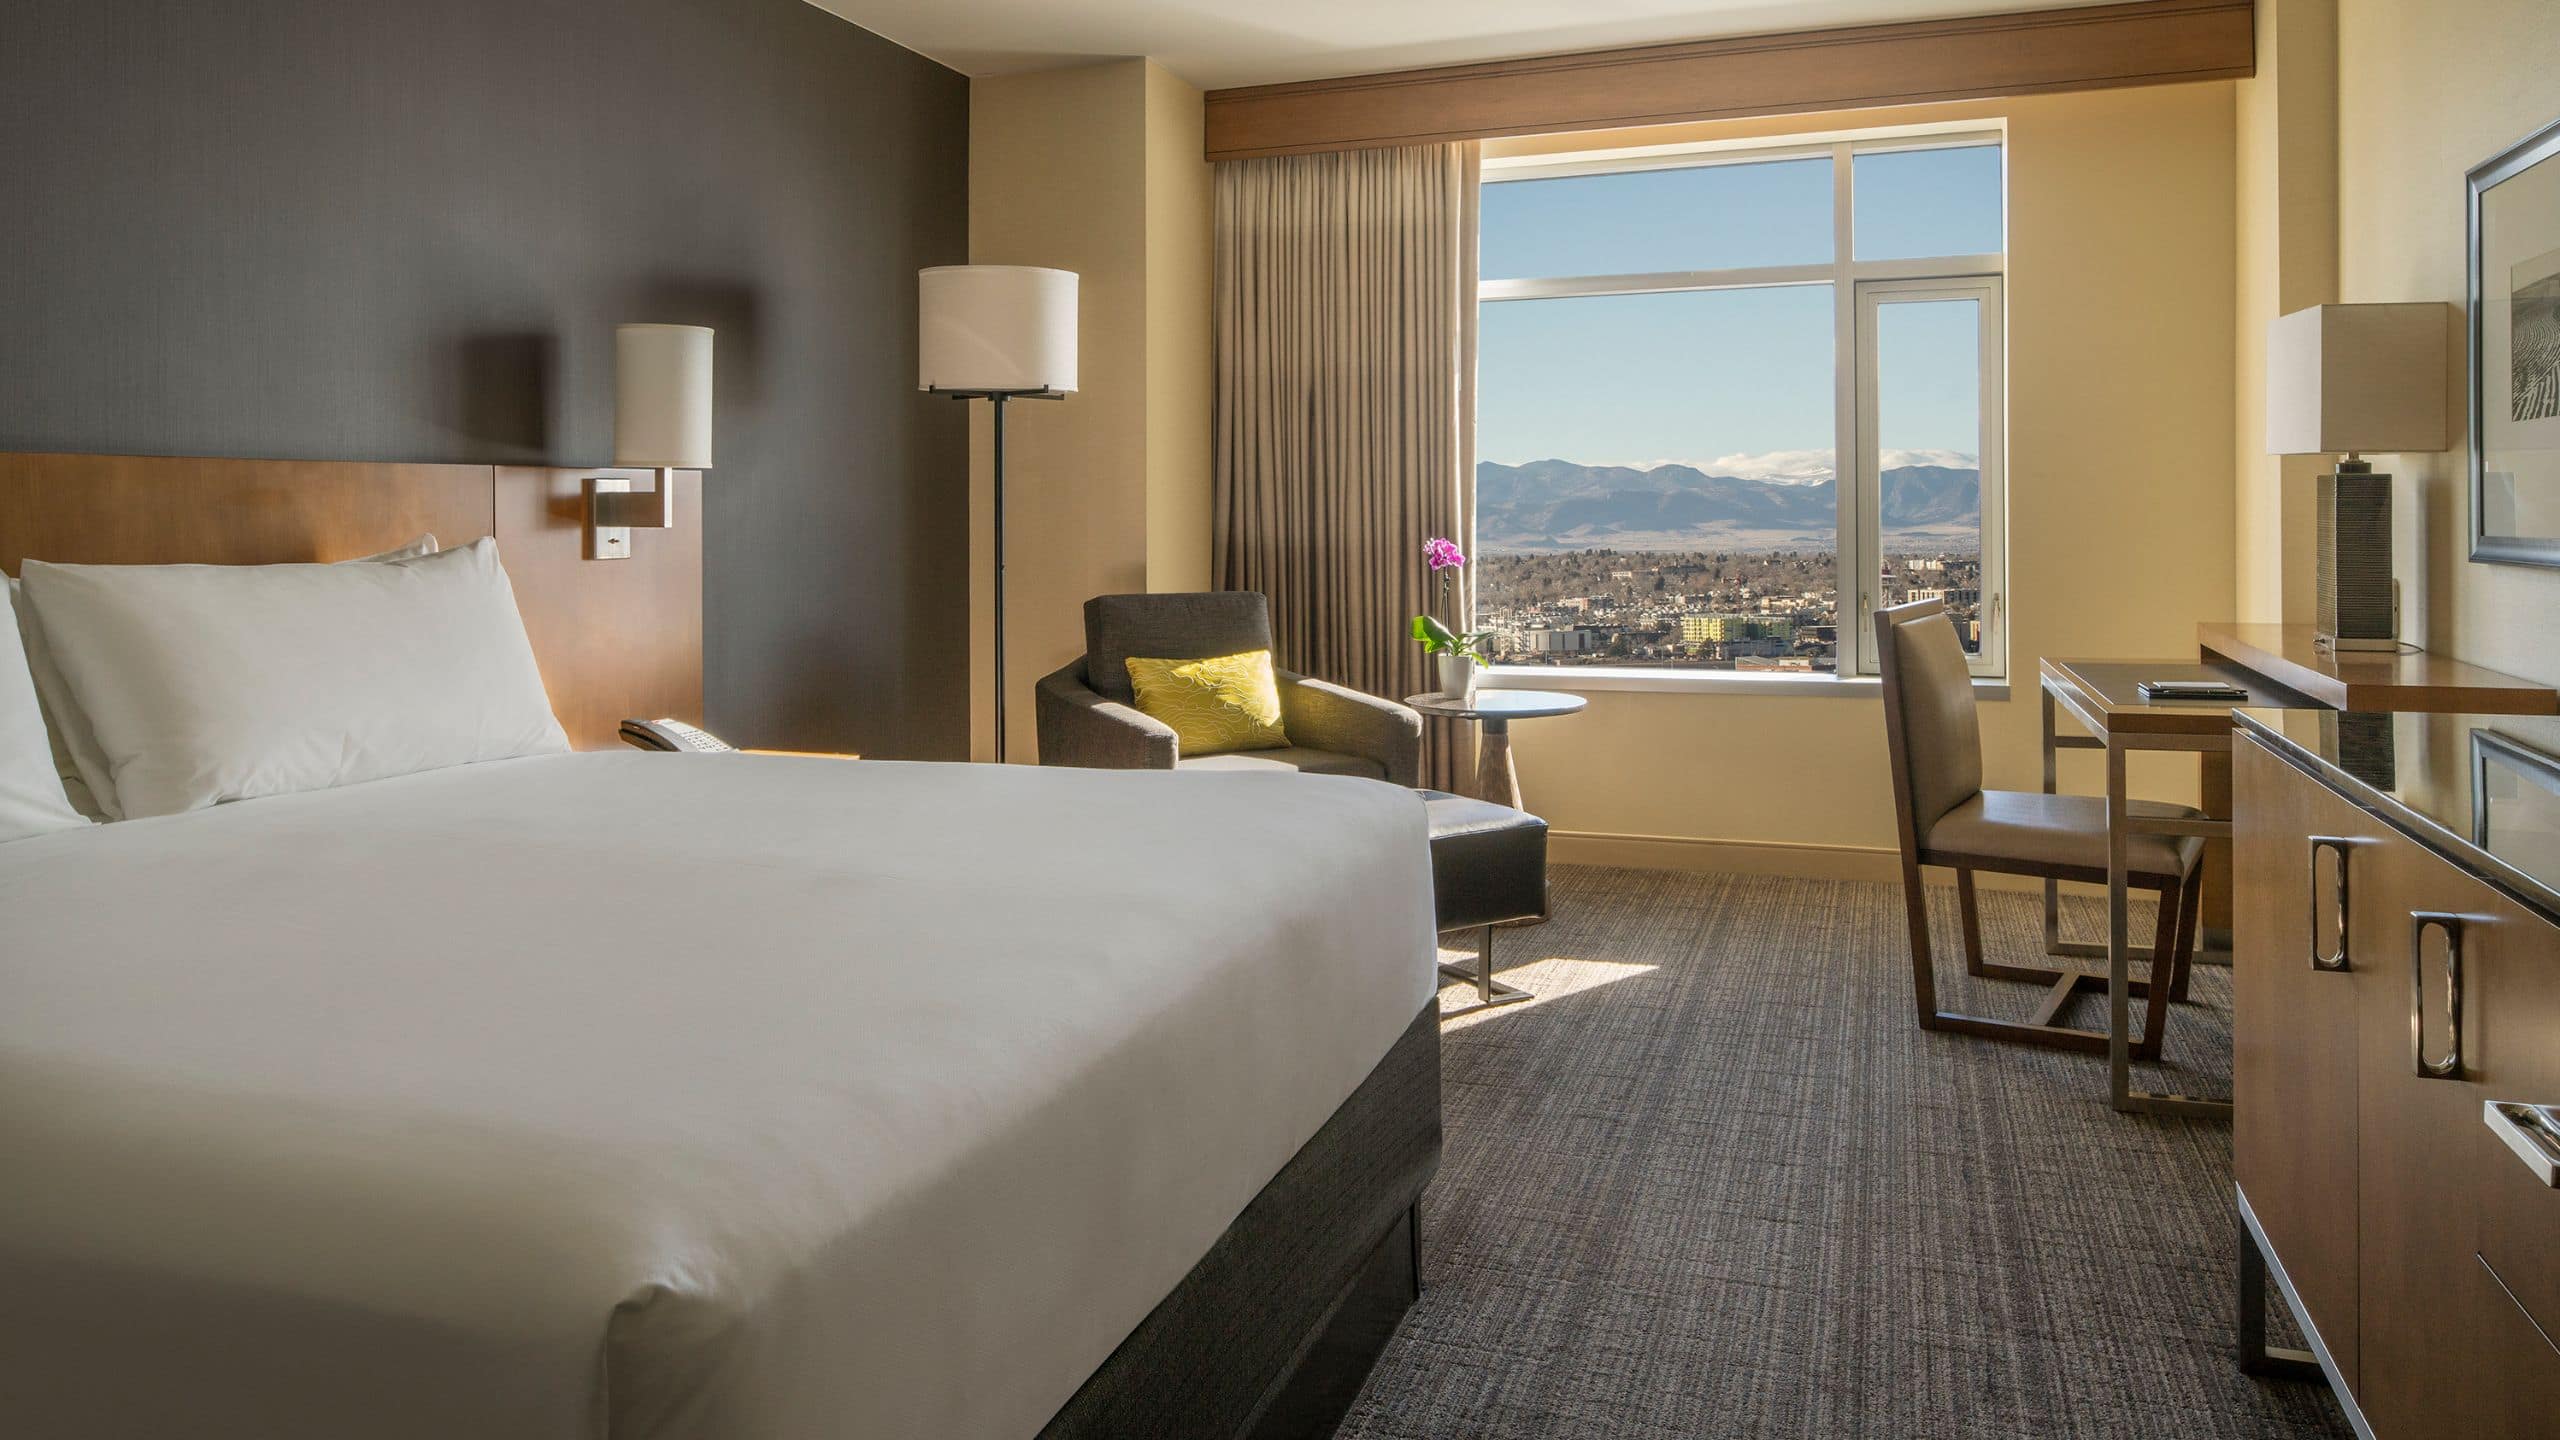 Downtown Denver hotel room with mountain view at Hyatt Regency Denver